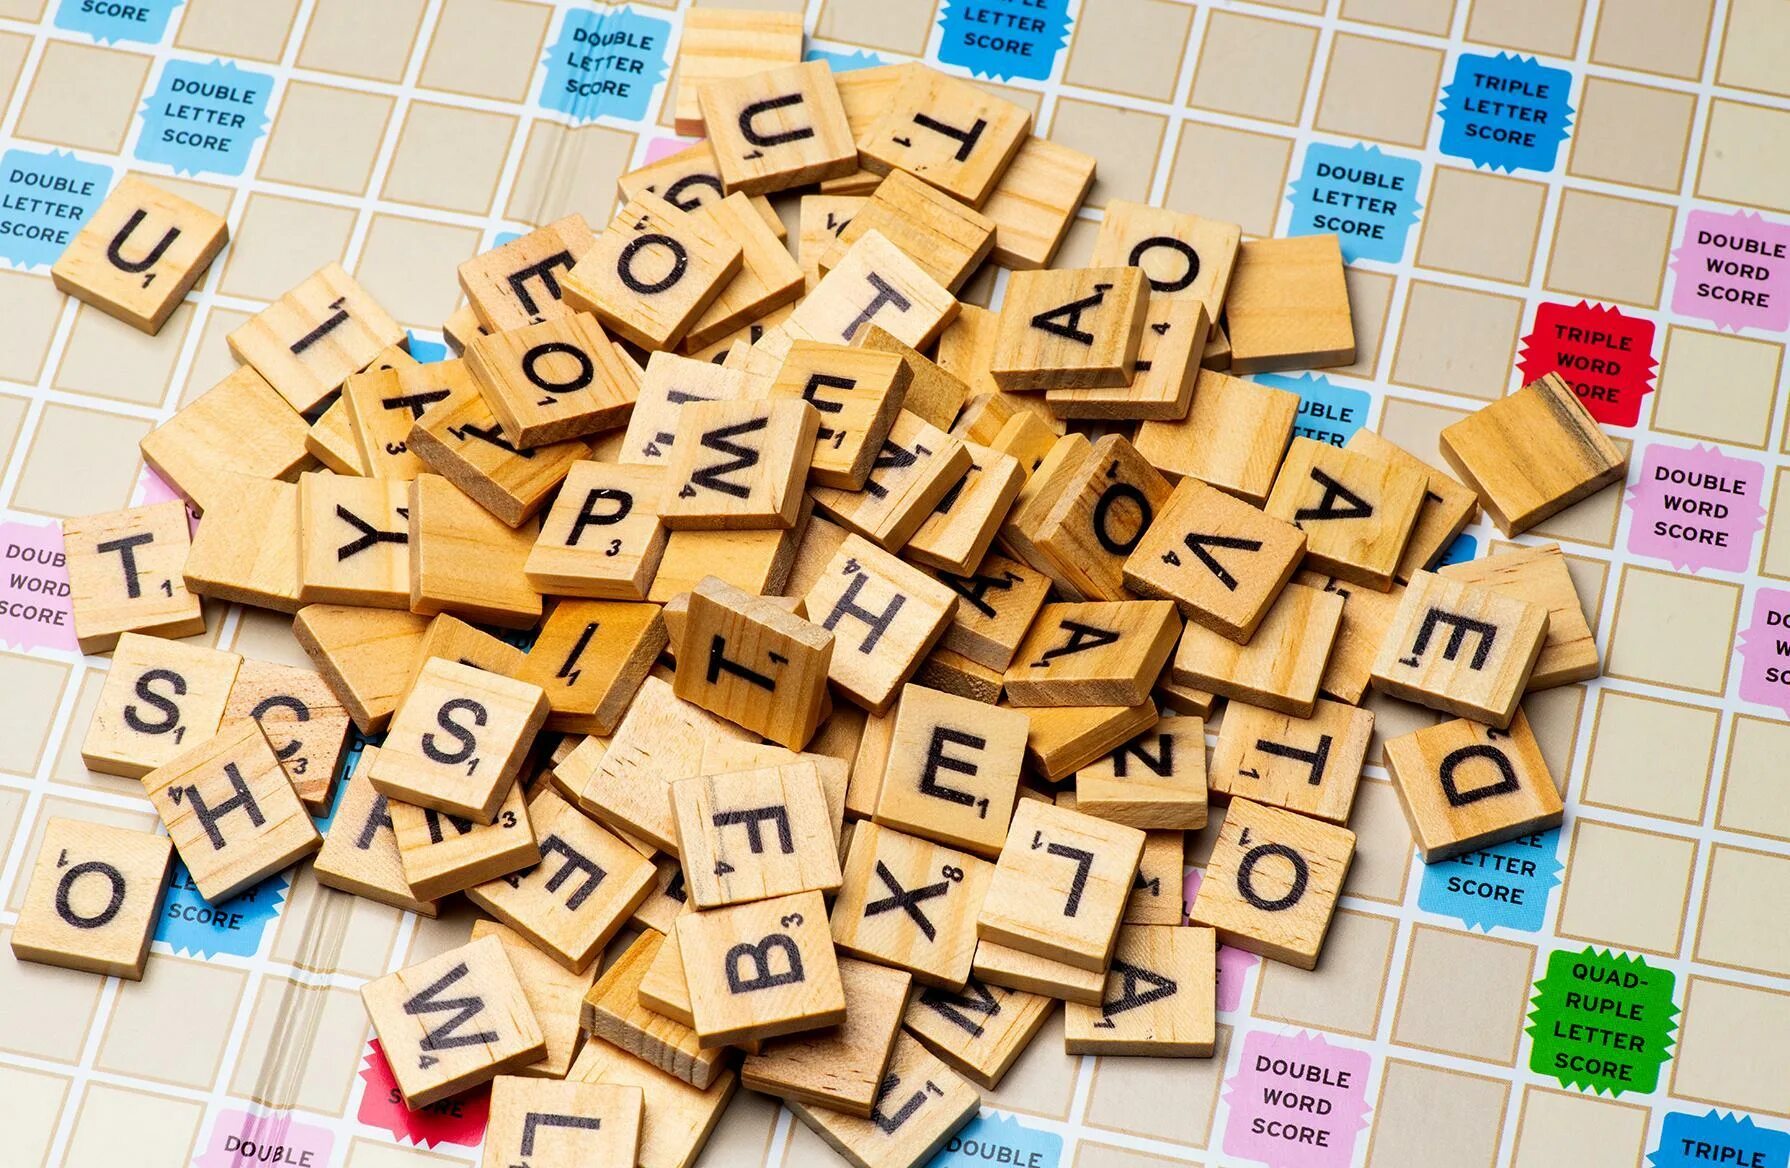 Scrabble буквы. Фотозона Скрэббл. Words. Скрабл русская версия. Покупка 5 букв